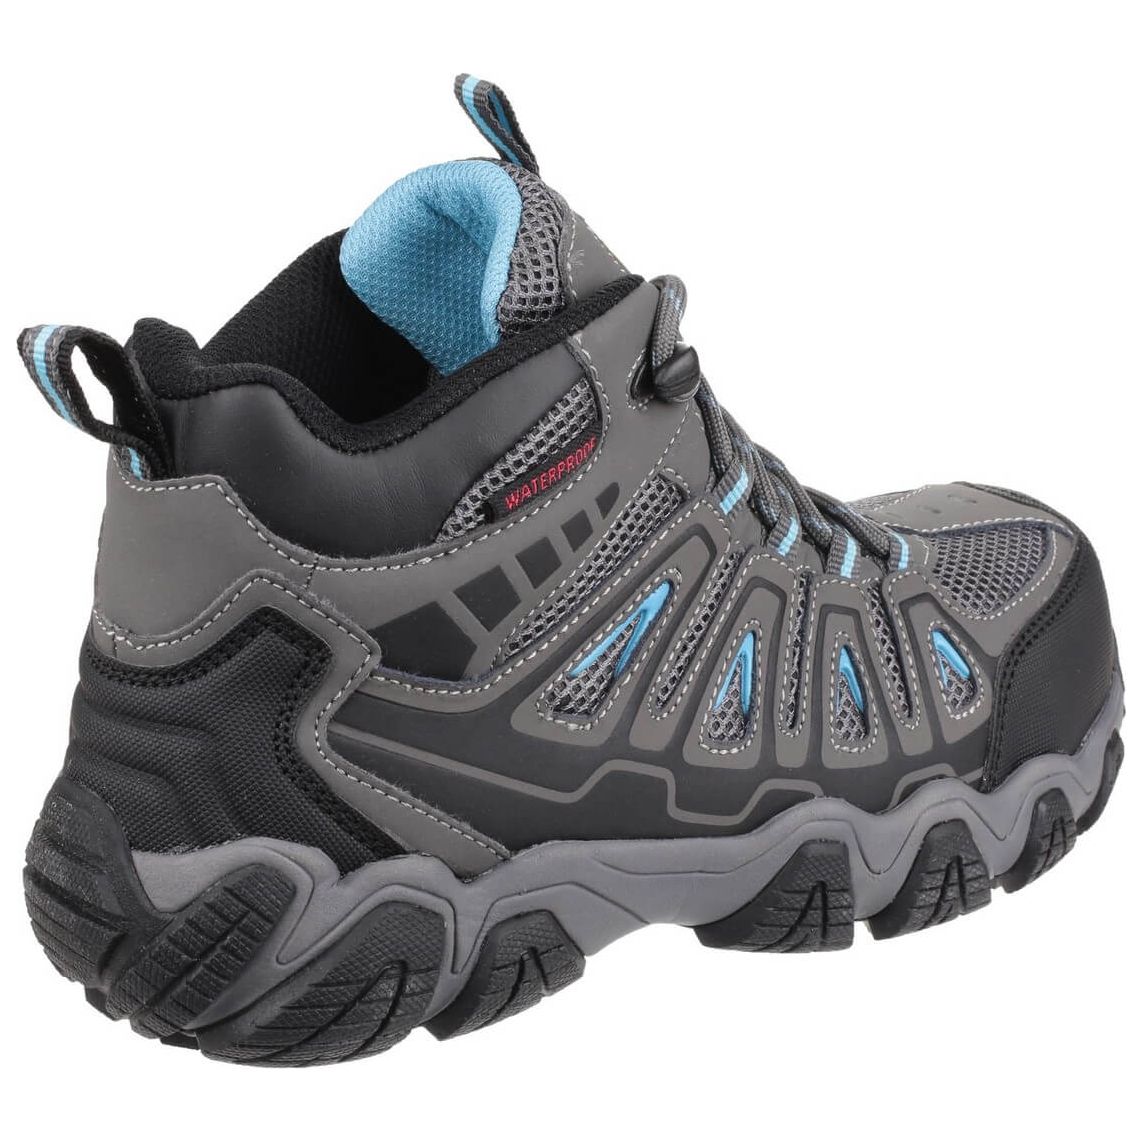 Amblers As802 Waterproof Metal-Free Safety Hiking Boots Womens - workweargurus.com